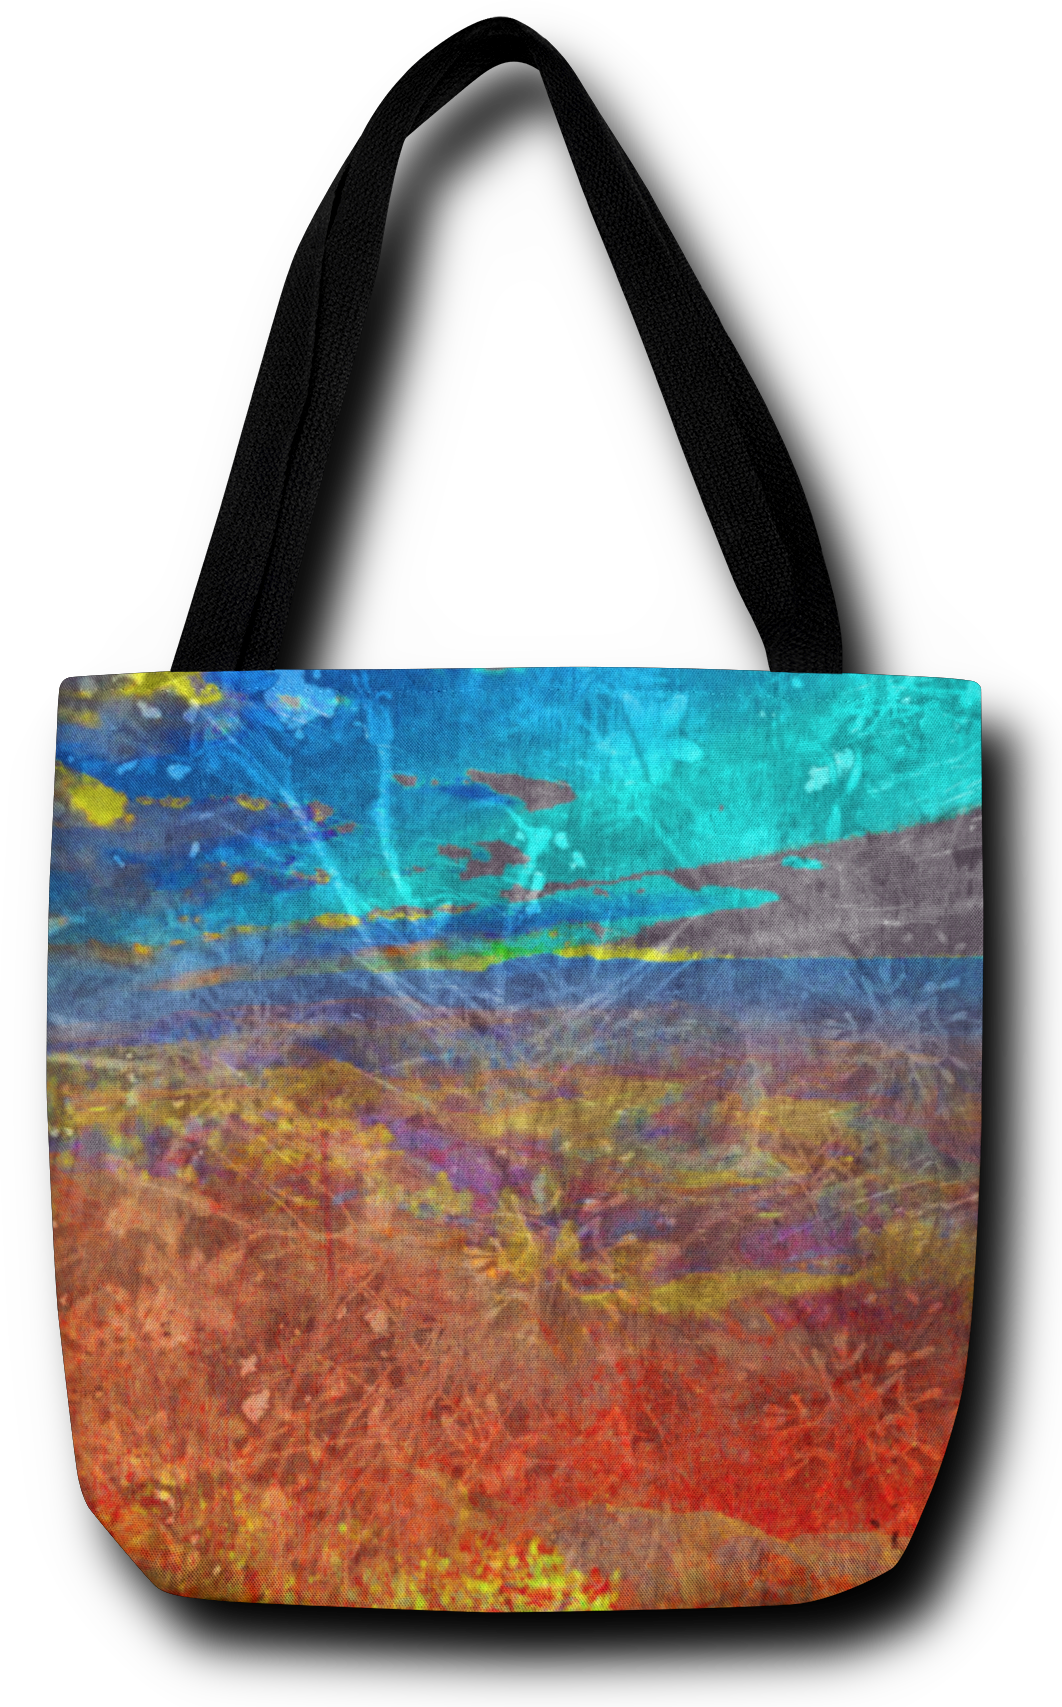 Sunrise - Tote Bag - Lisa Dailey Black Cat Art & Design